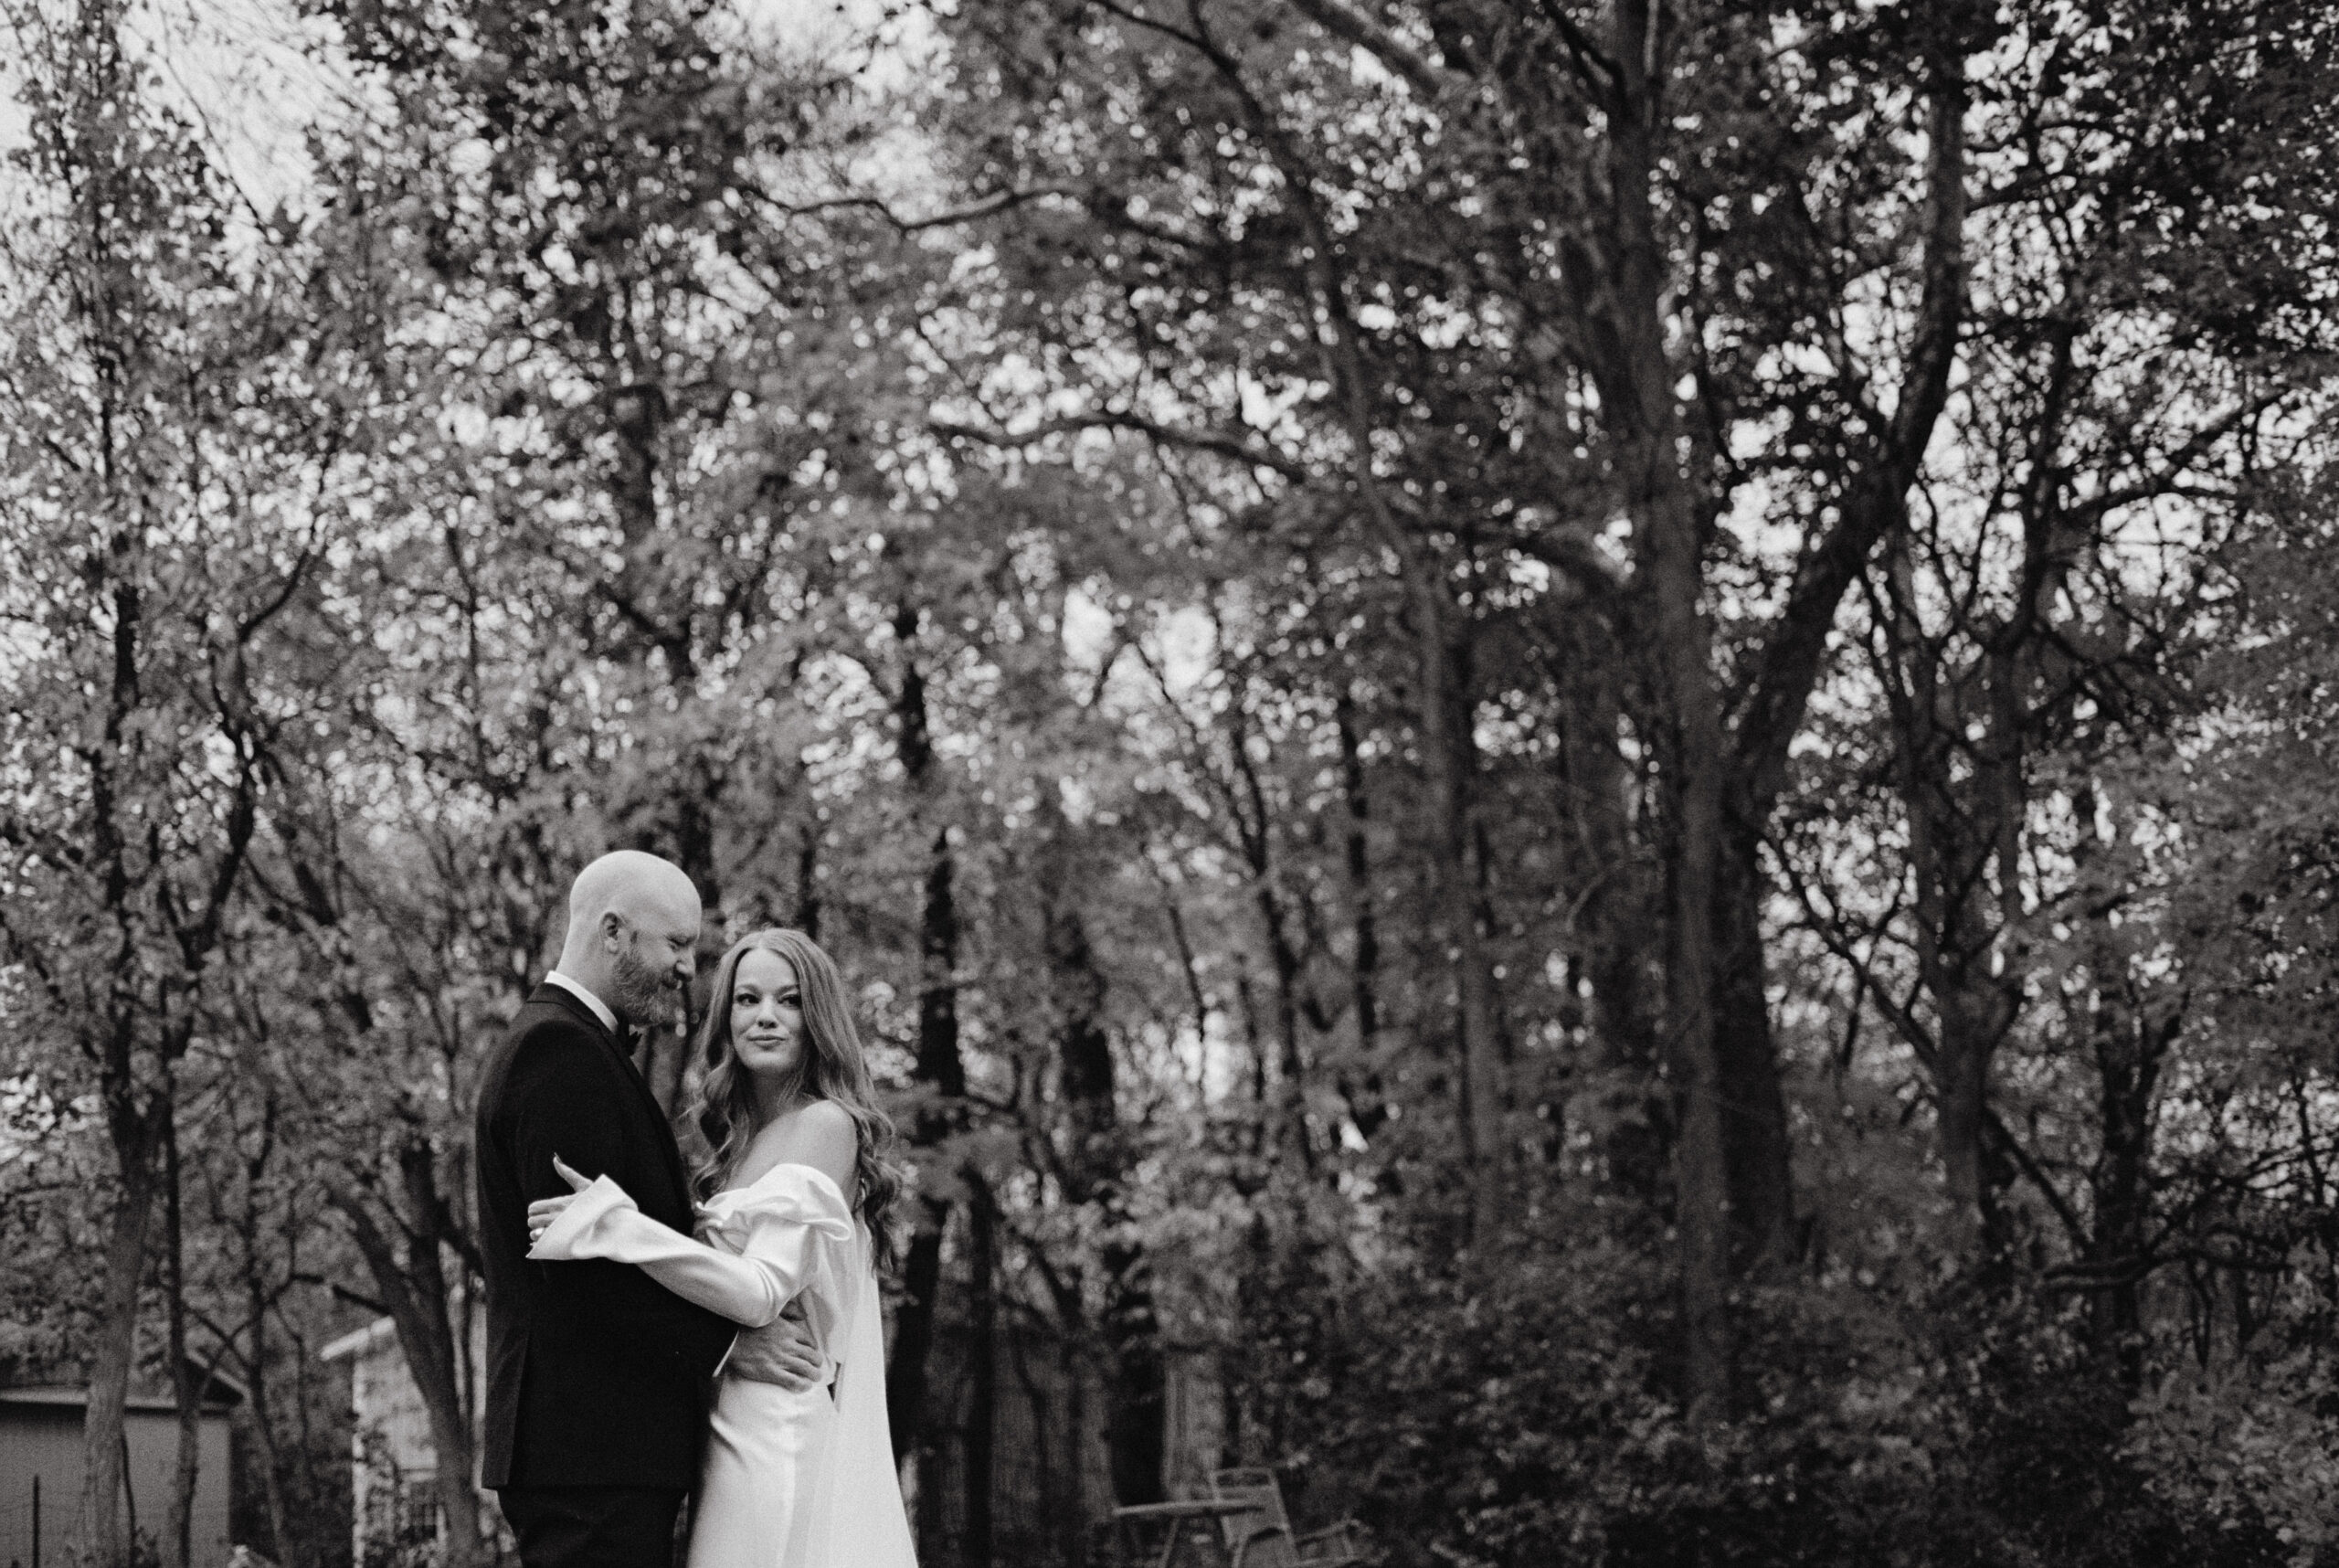 Black and white newlyweds portrait outdoors. Candid wedding photography image by Jenny Fu Studio